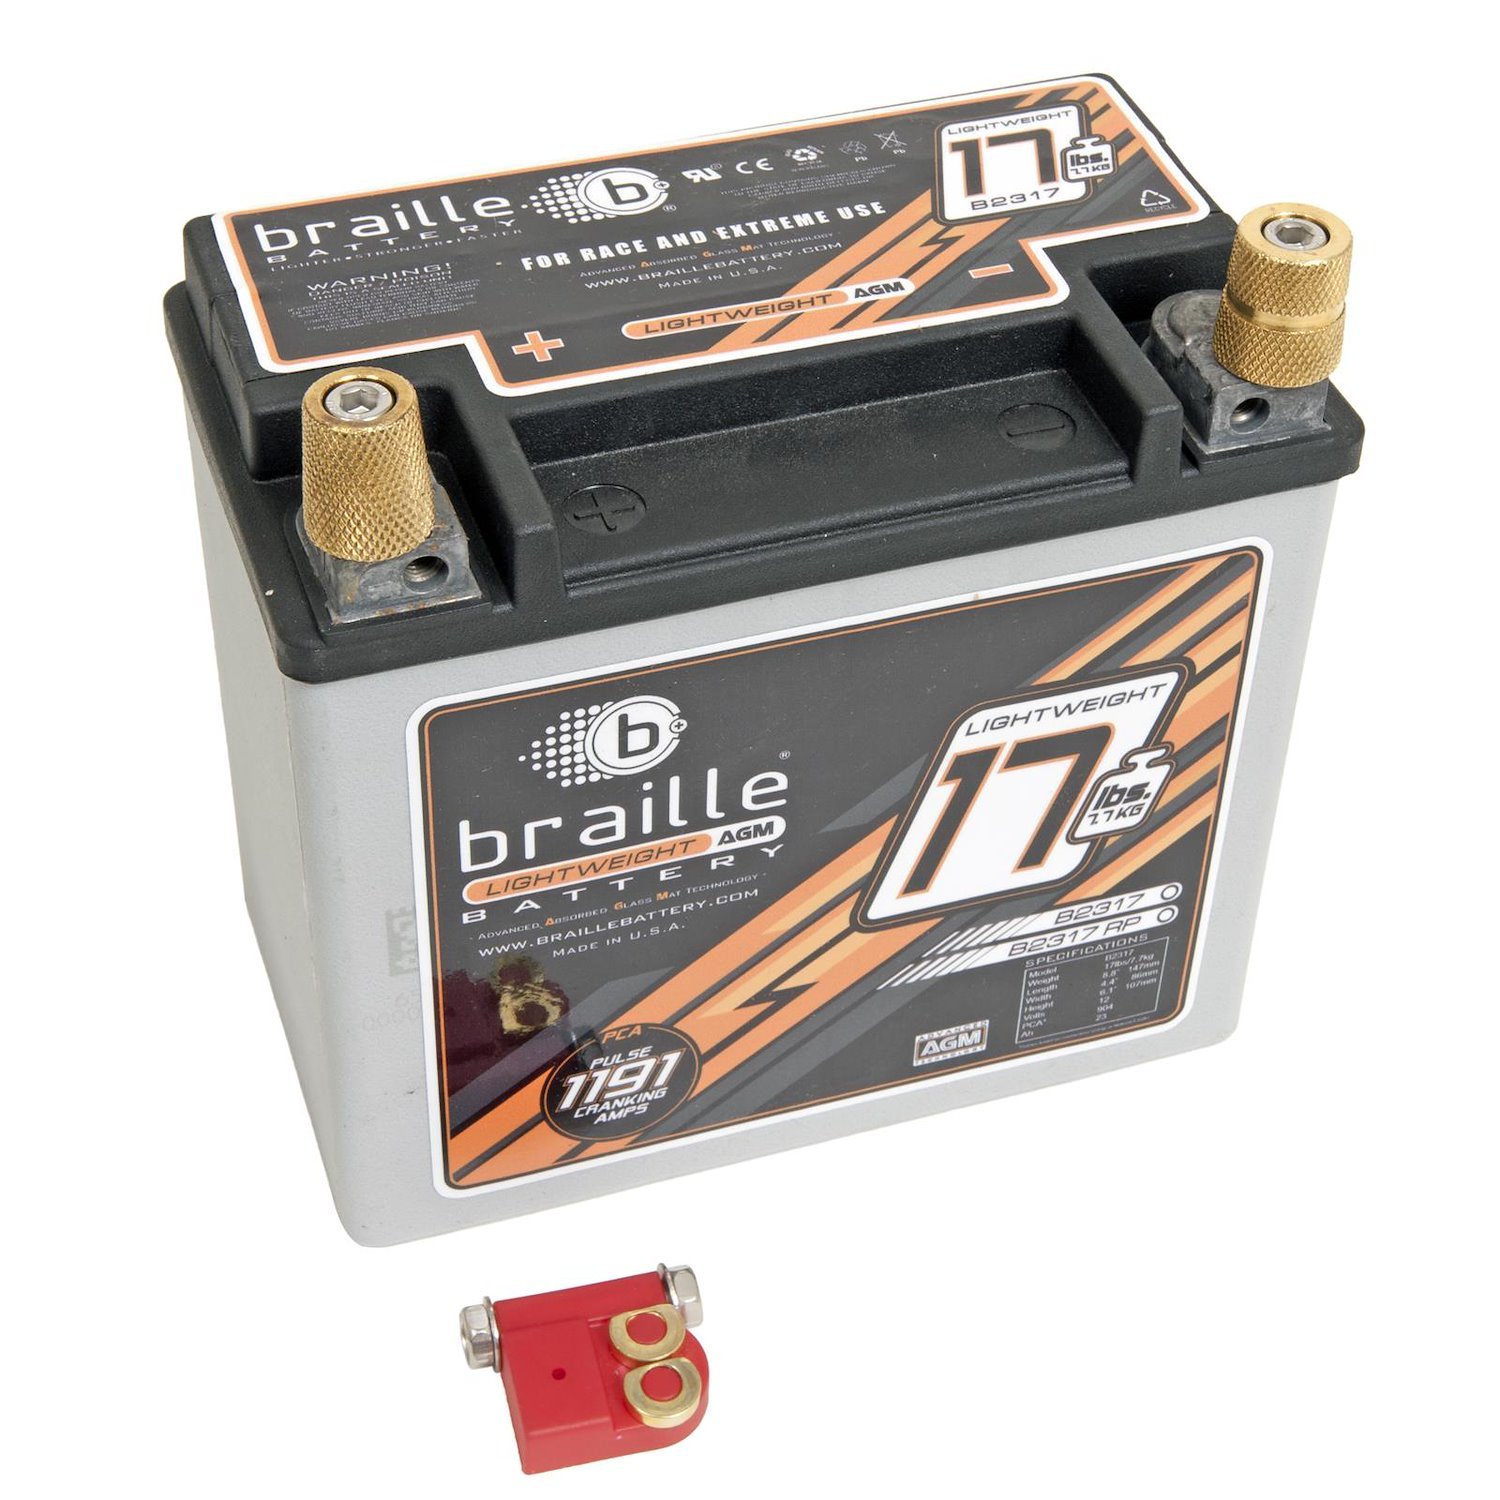 B2317 Braille Advanced AGM Lightweight Racing Battery (17 lbs.)